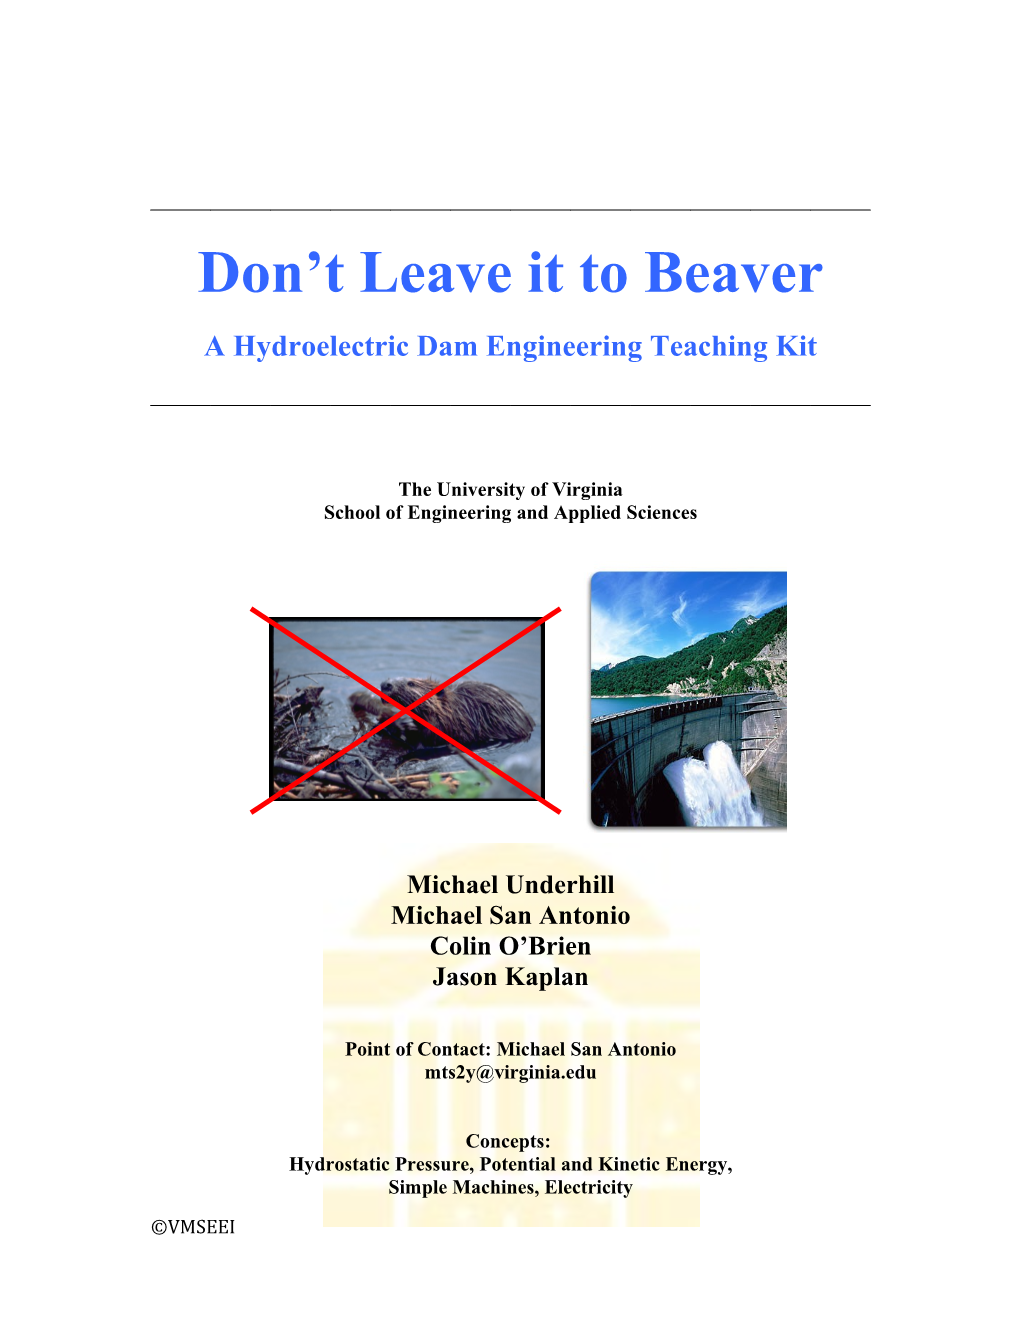 A Hydroelectric Dam Engineering Teaching Kit